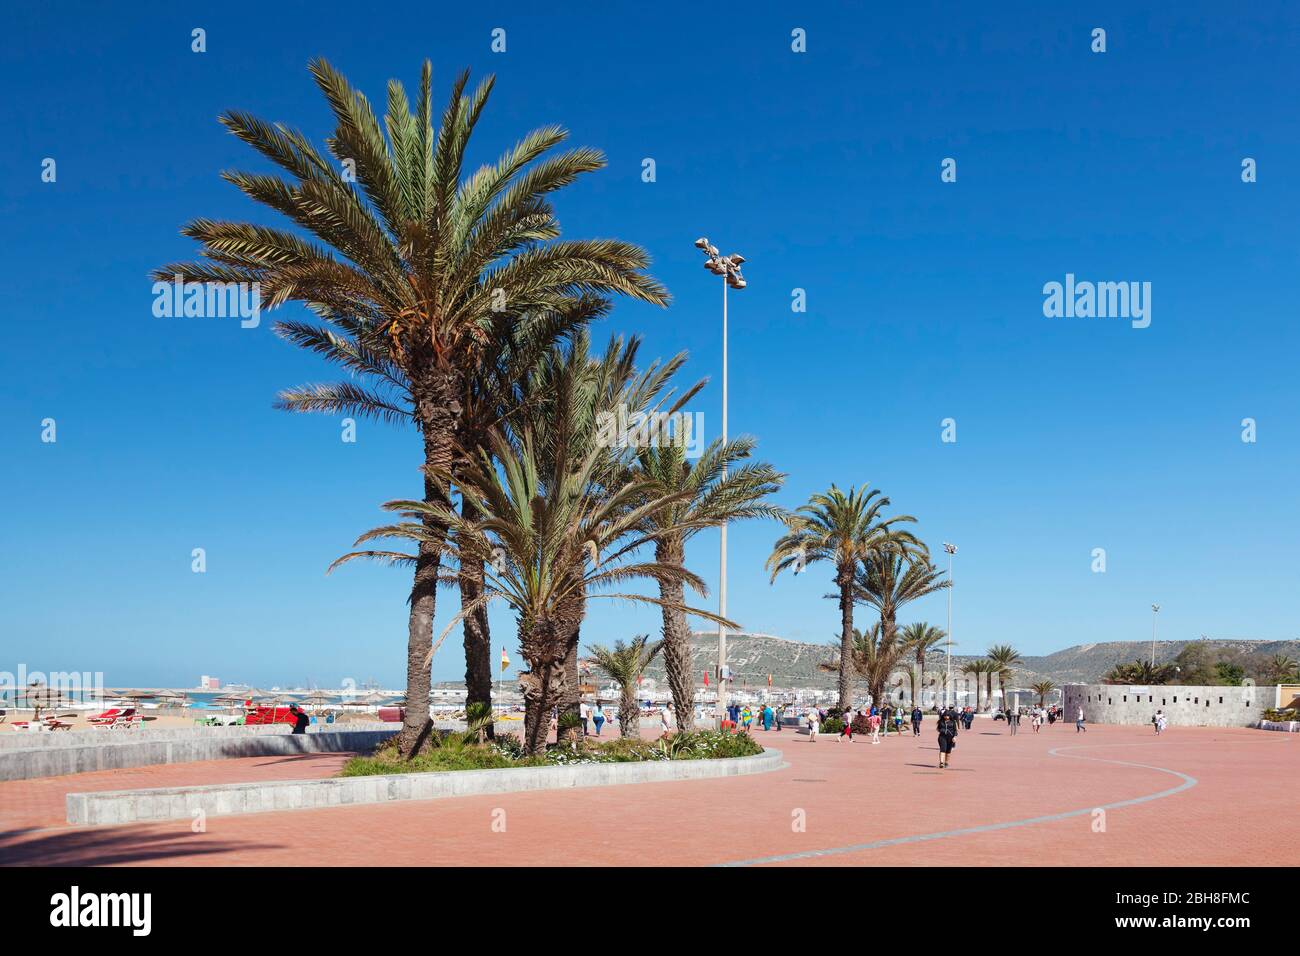 Promenade am Strand von Agadir, Al-Magreb, Marokko, Afrika Stockfoto